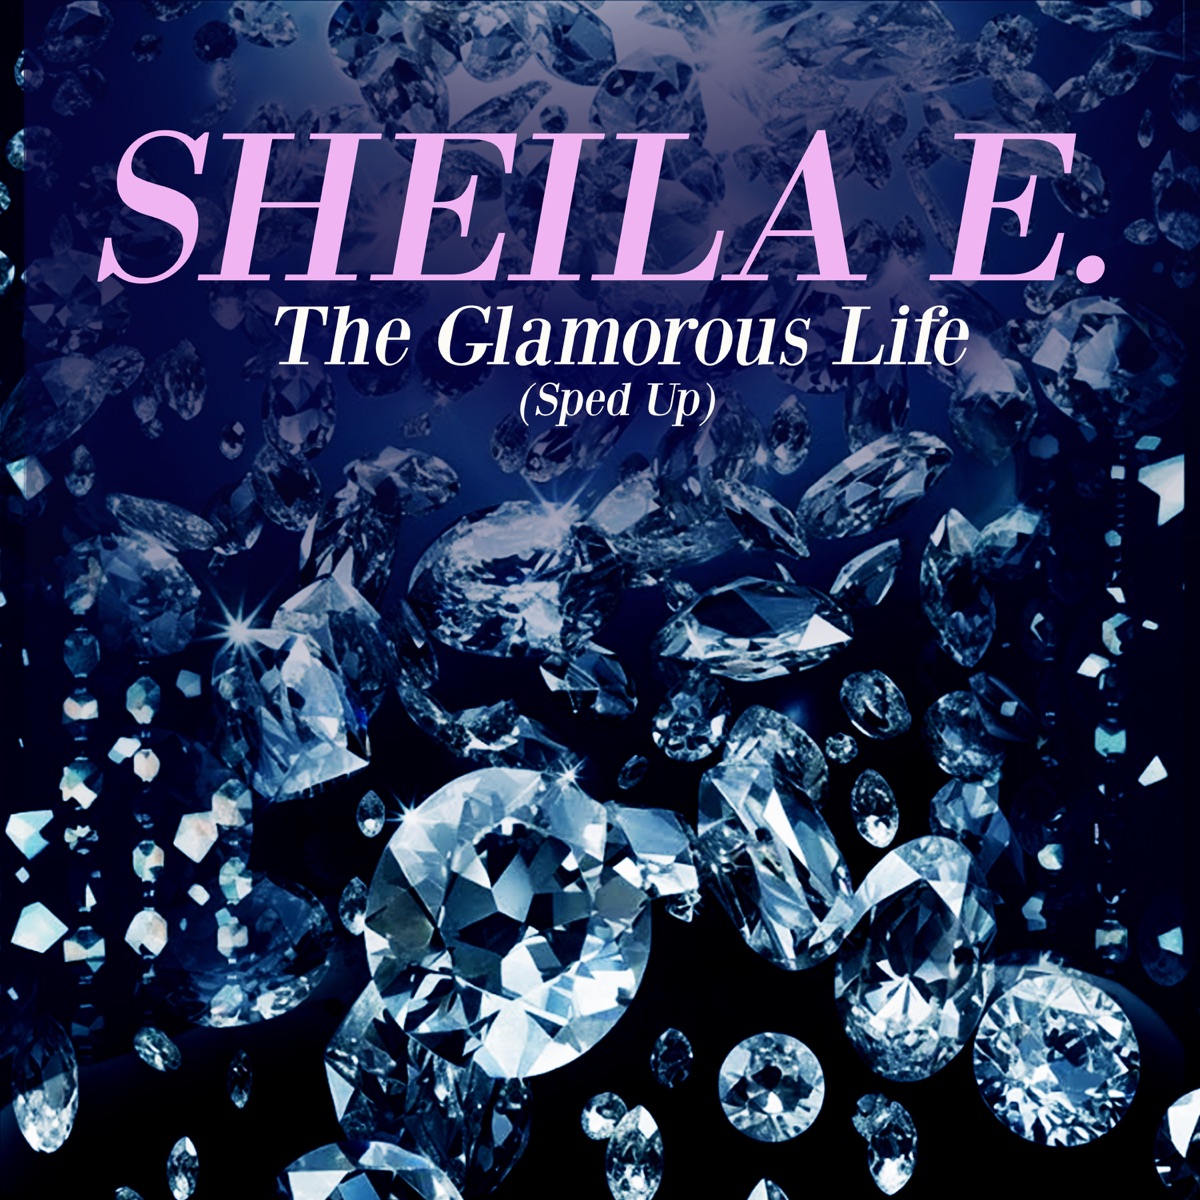 The Glamorous Life - Album by Sheila E. - Apple Music